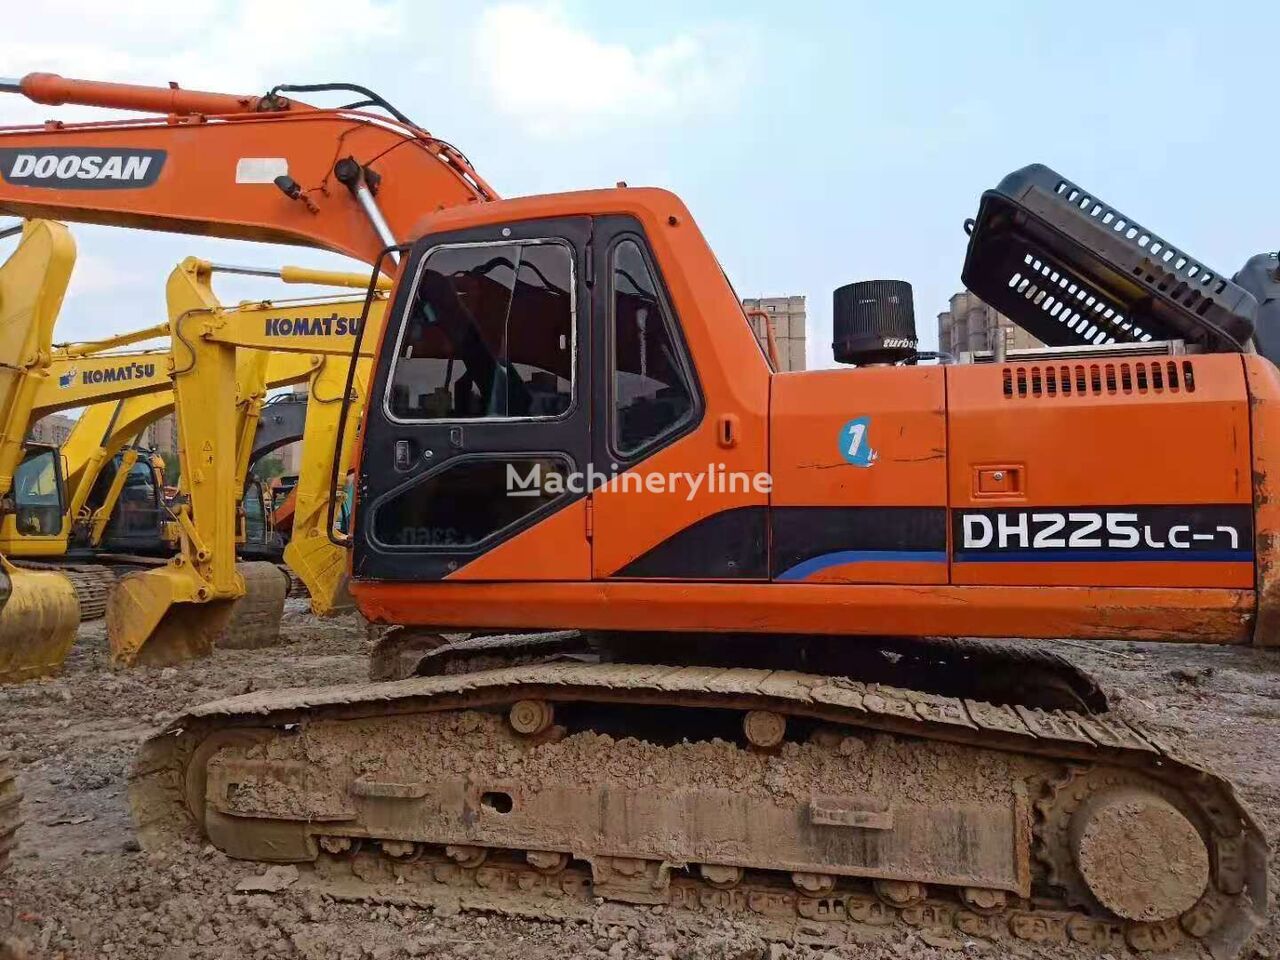 Doosan  DH225LC-7 tracked excavator